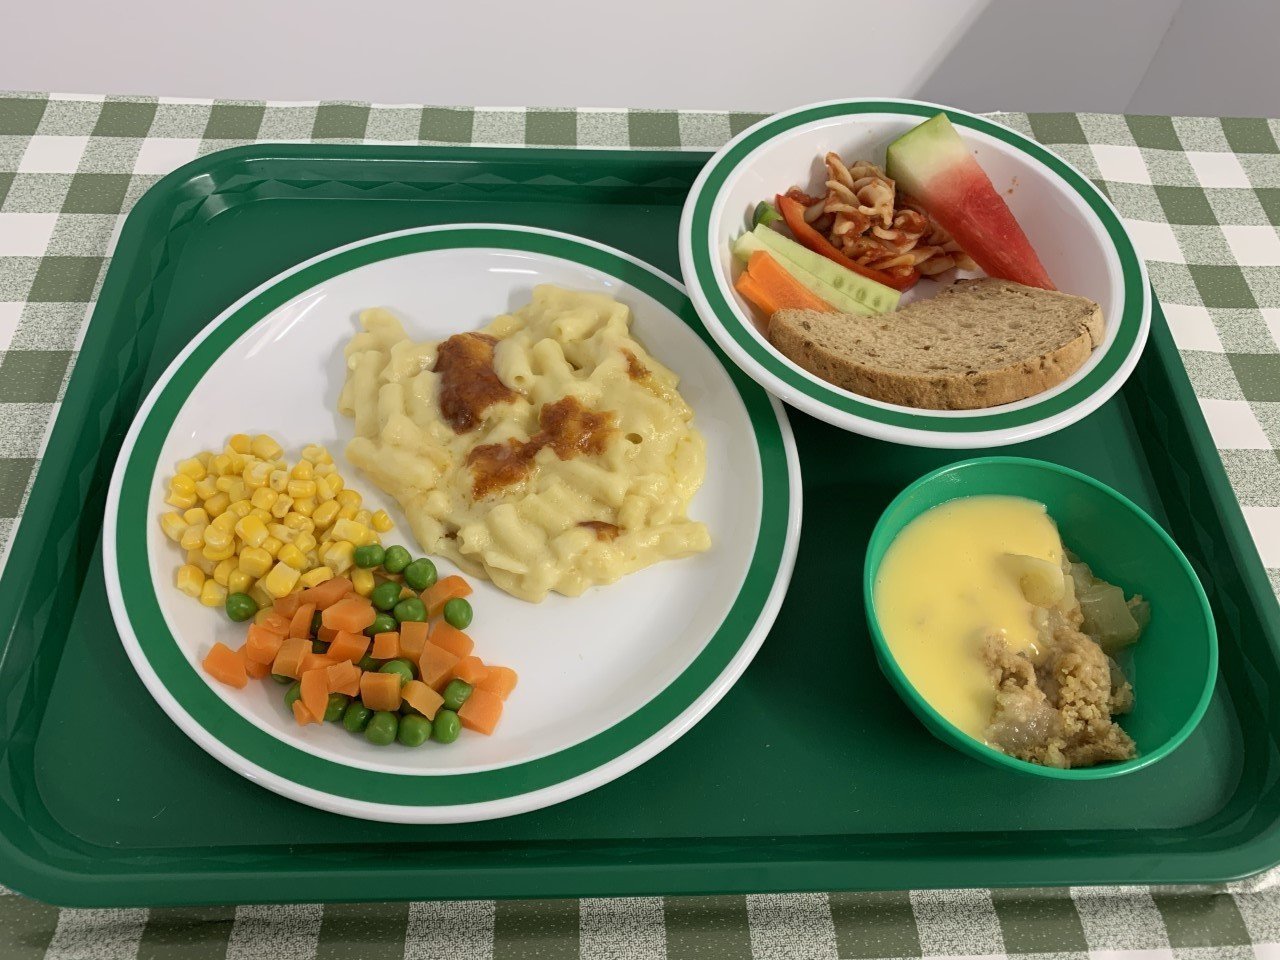 King's Gate Primary School - School Meals